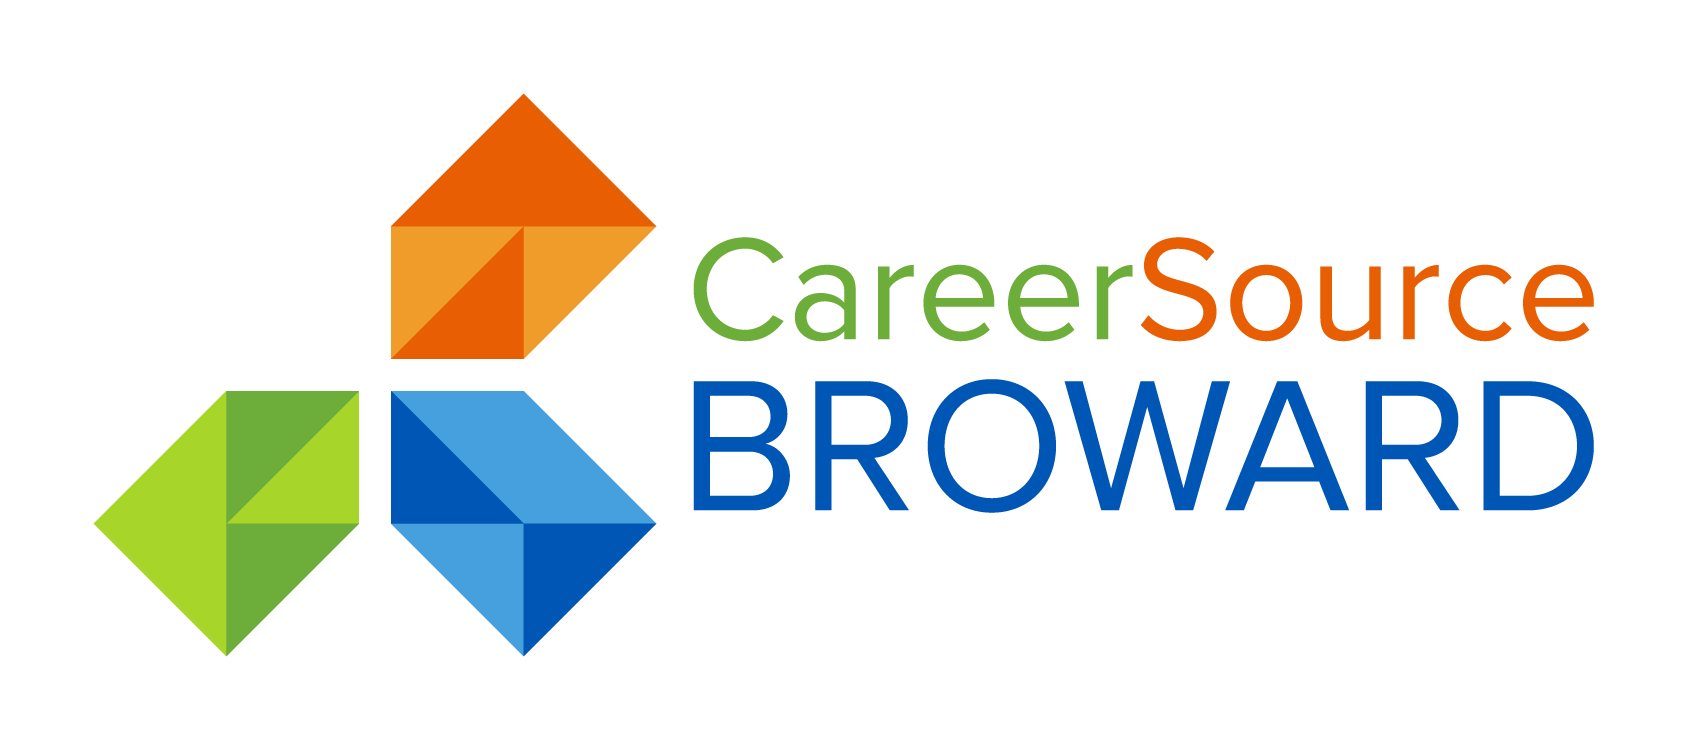 CareerSource Broward logo